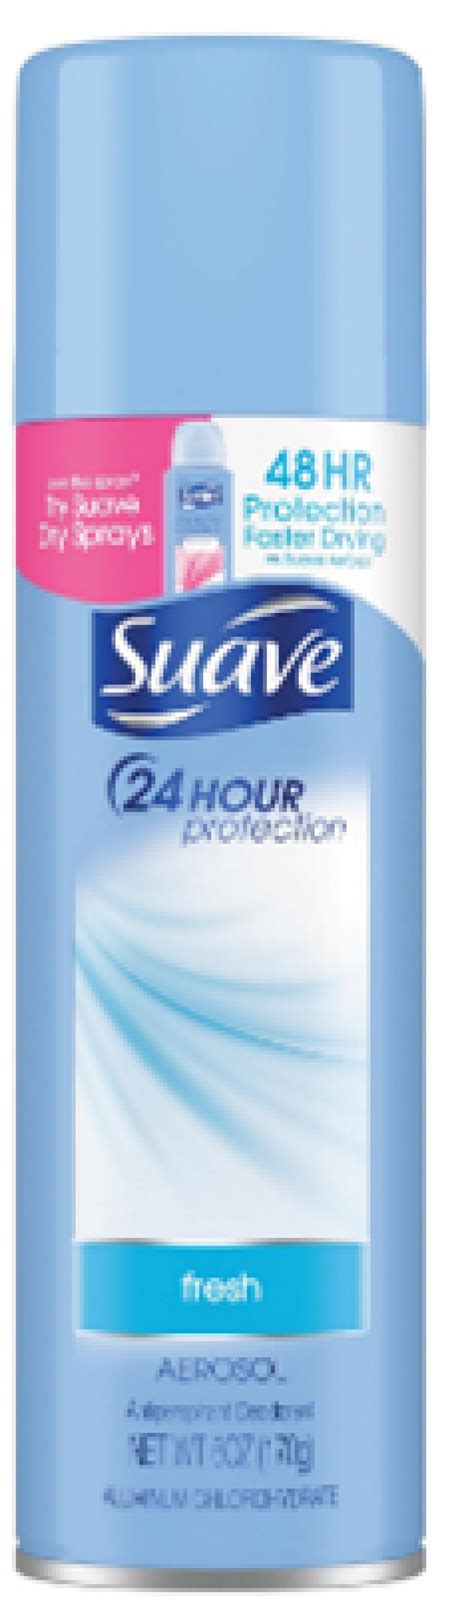 suave deodorant spray recall